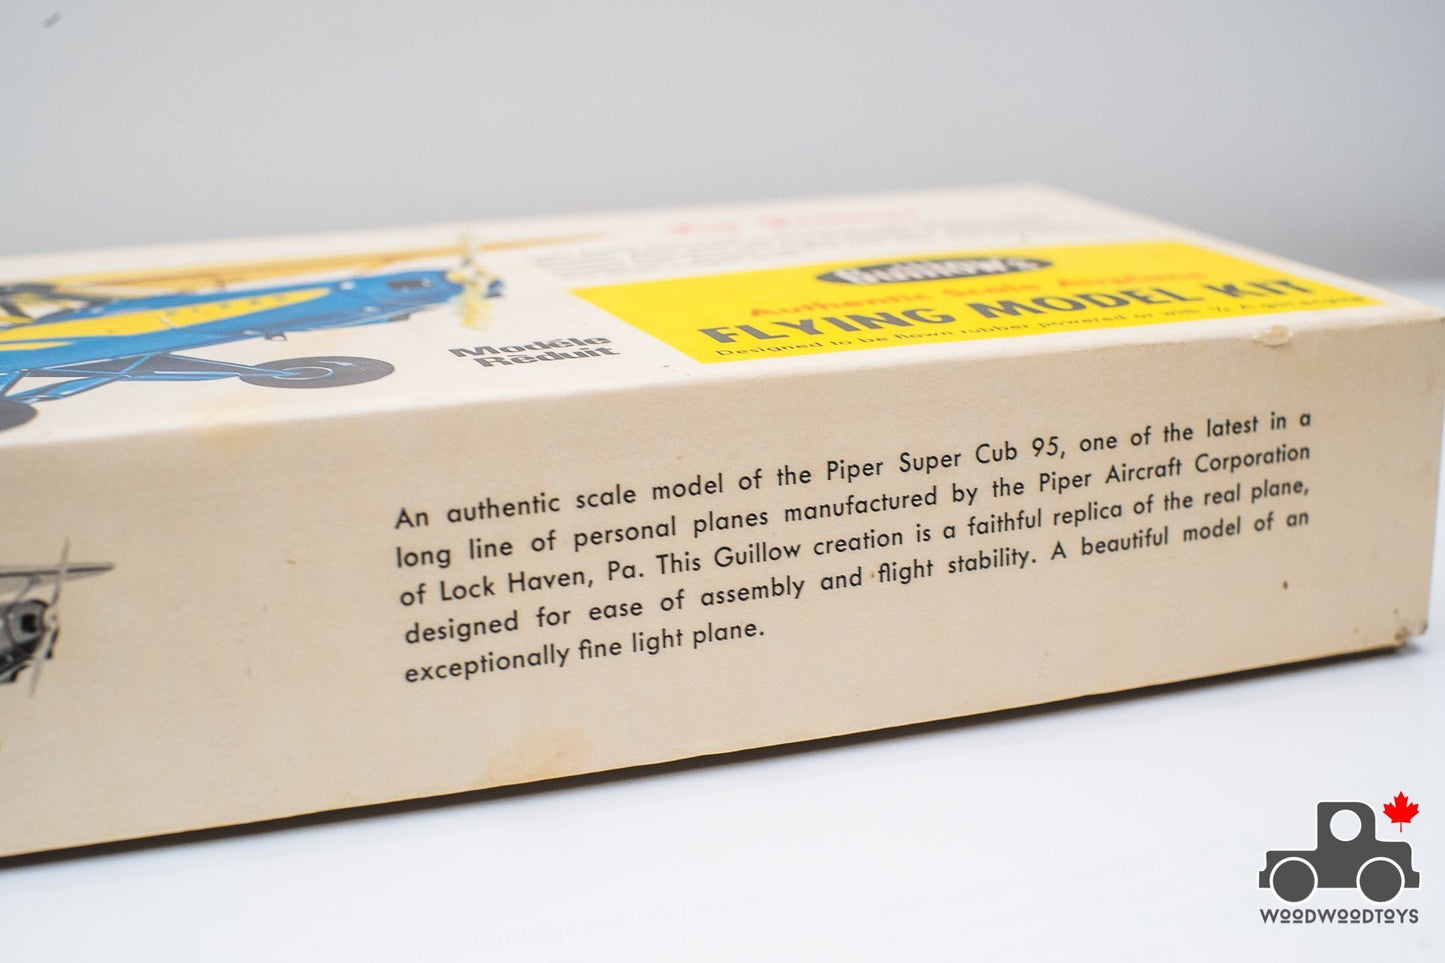 Circa 1961 Guillow's Piper Super Cub 95 Wooden Plane Model (Boxed) - Wood Wood Toys Canada's Favourite Montessori Toy Store